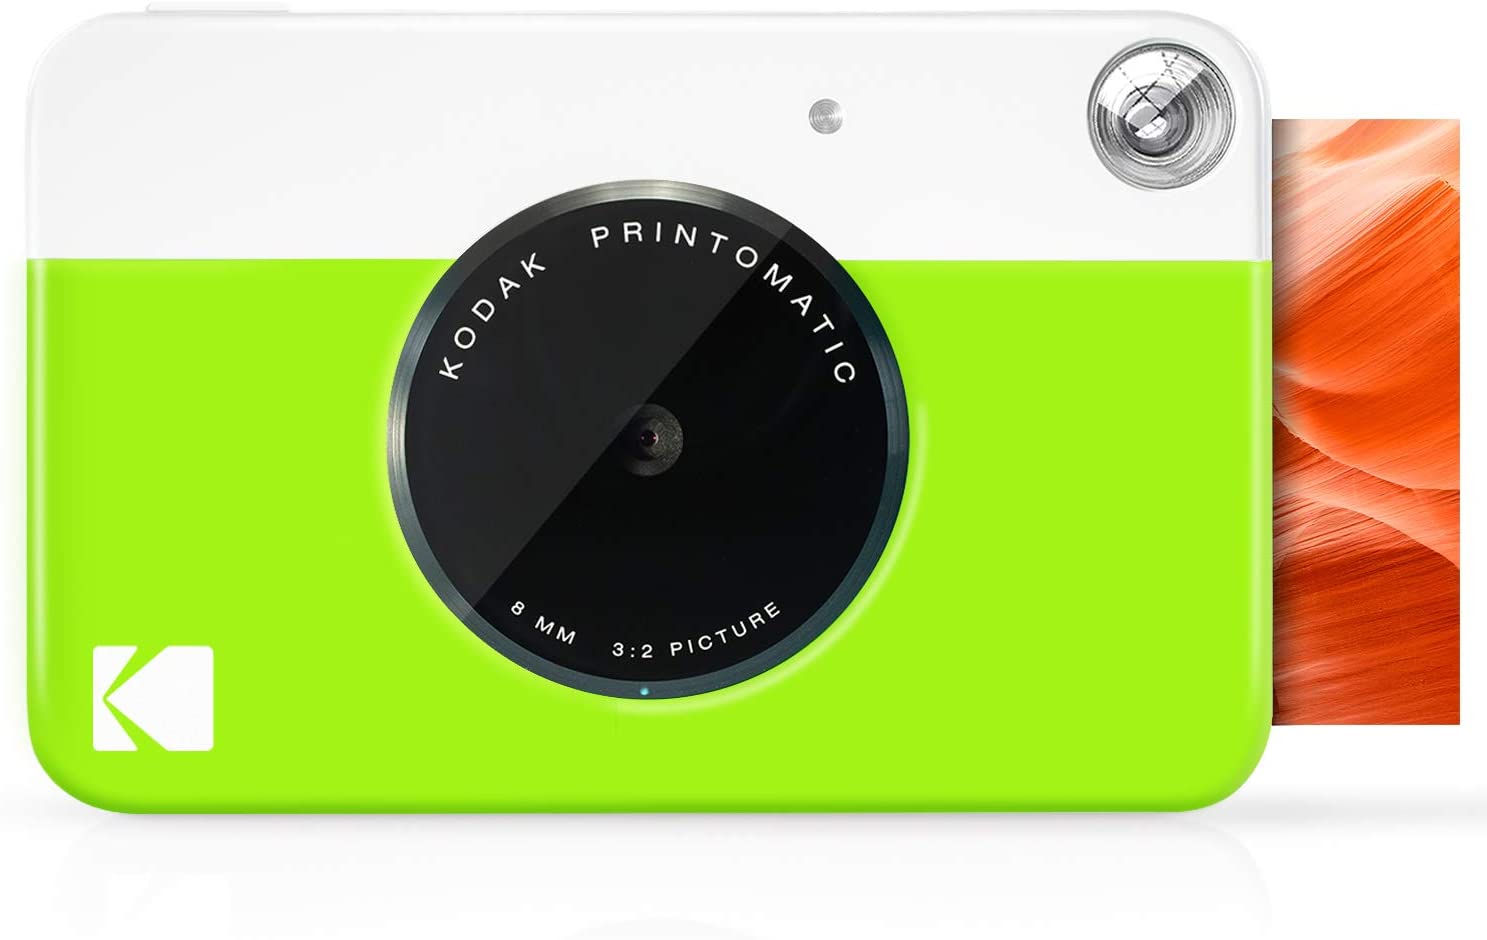 Kodak Printomatic Sticky-Backed Photo Paper Digital Instant Camera